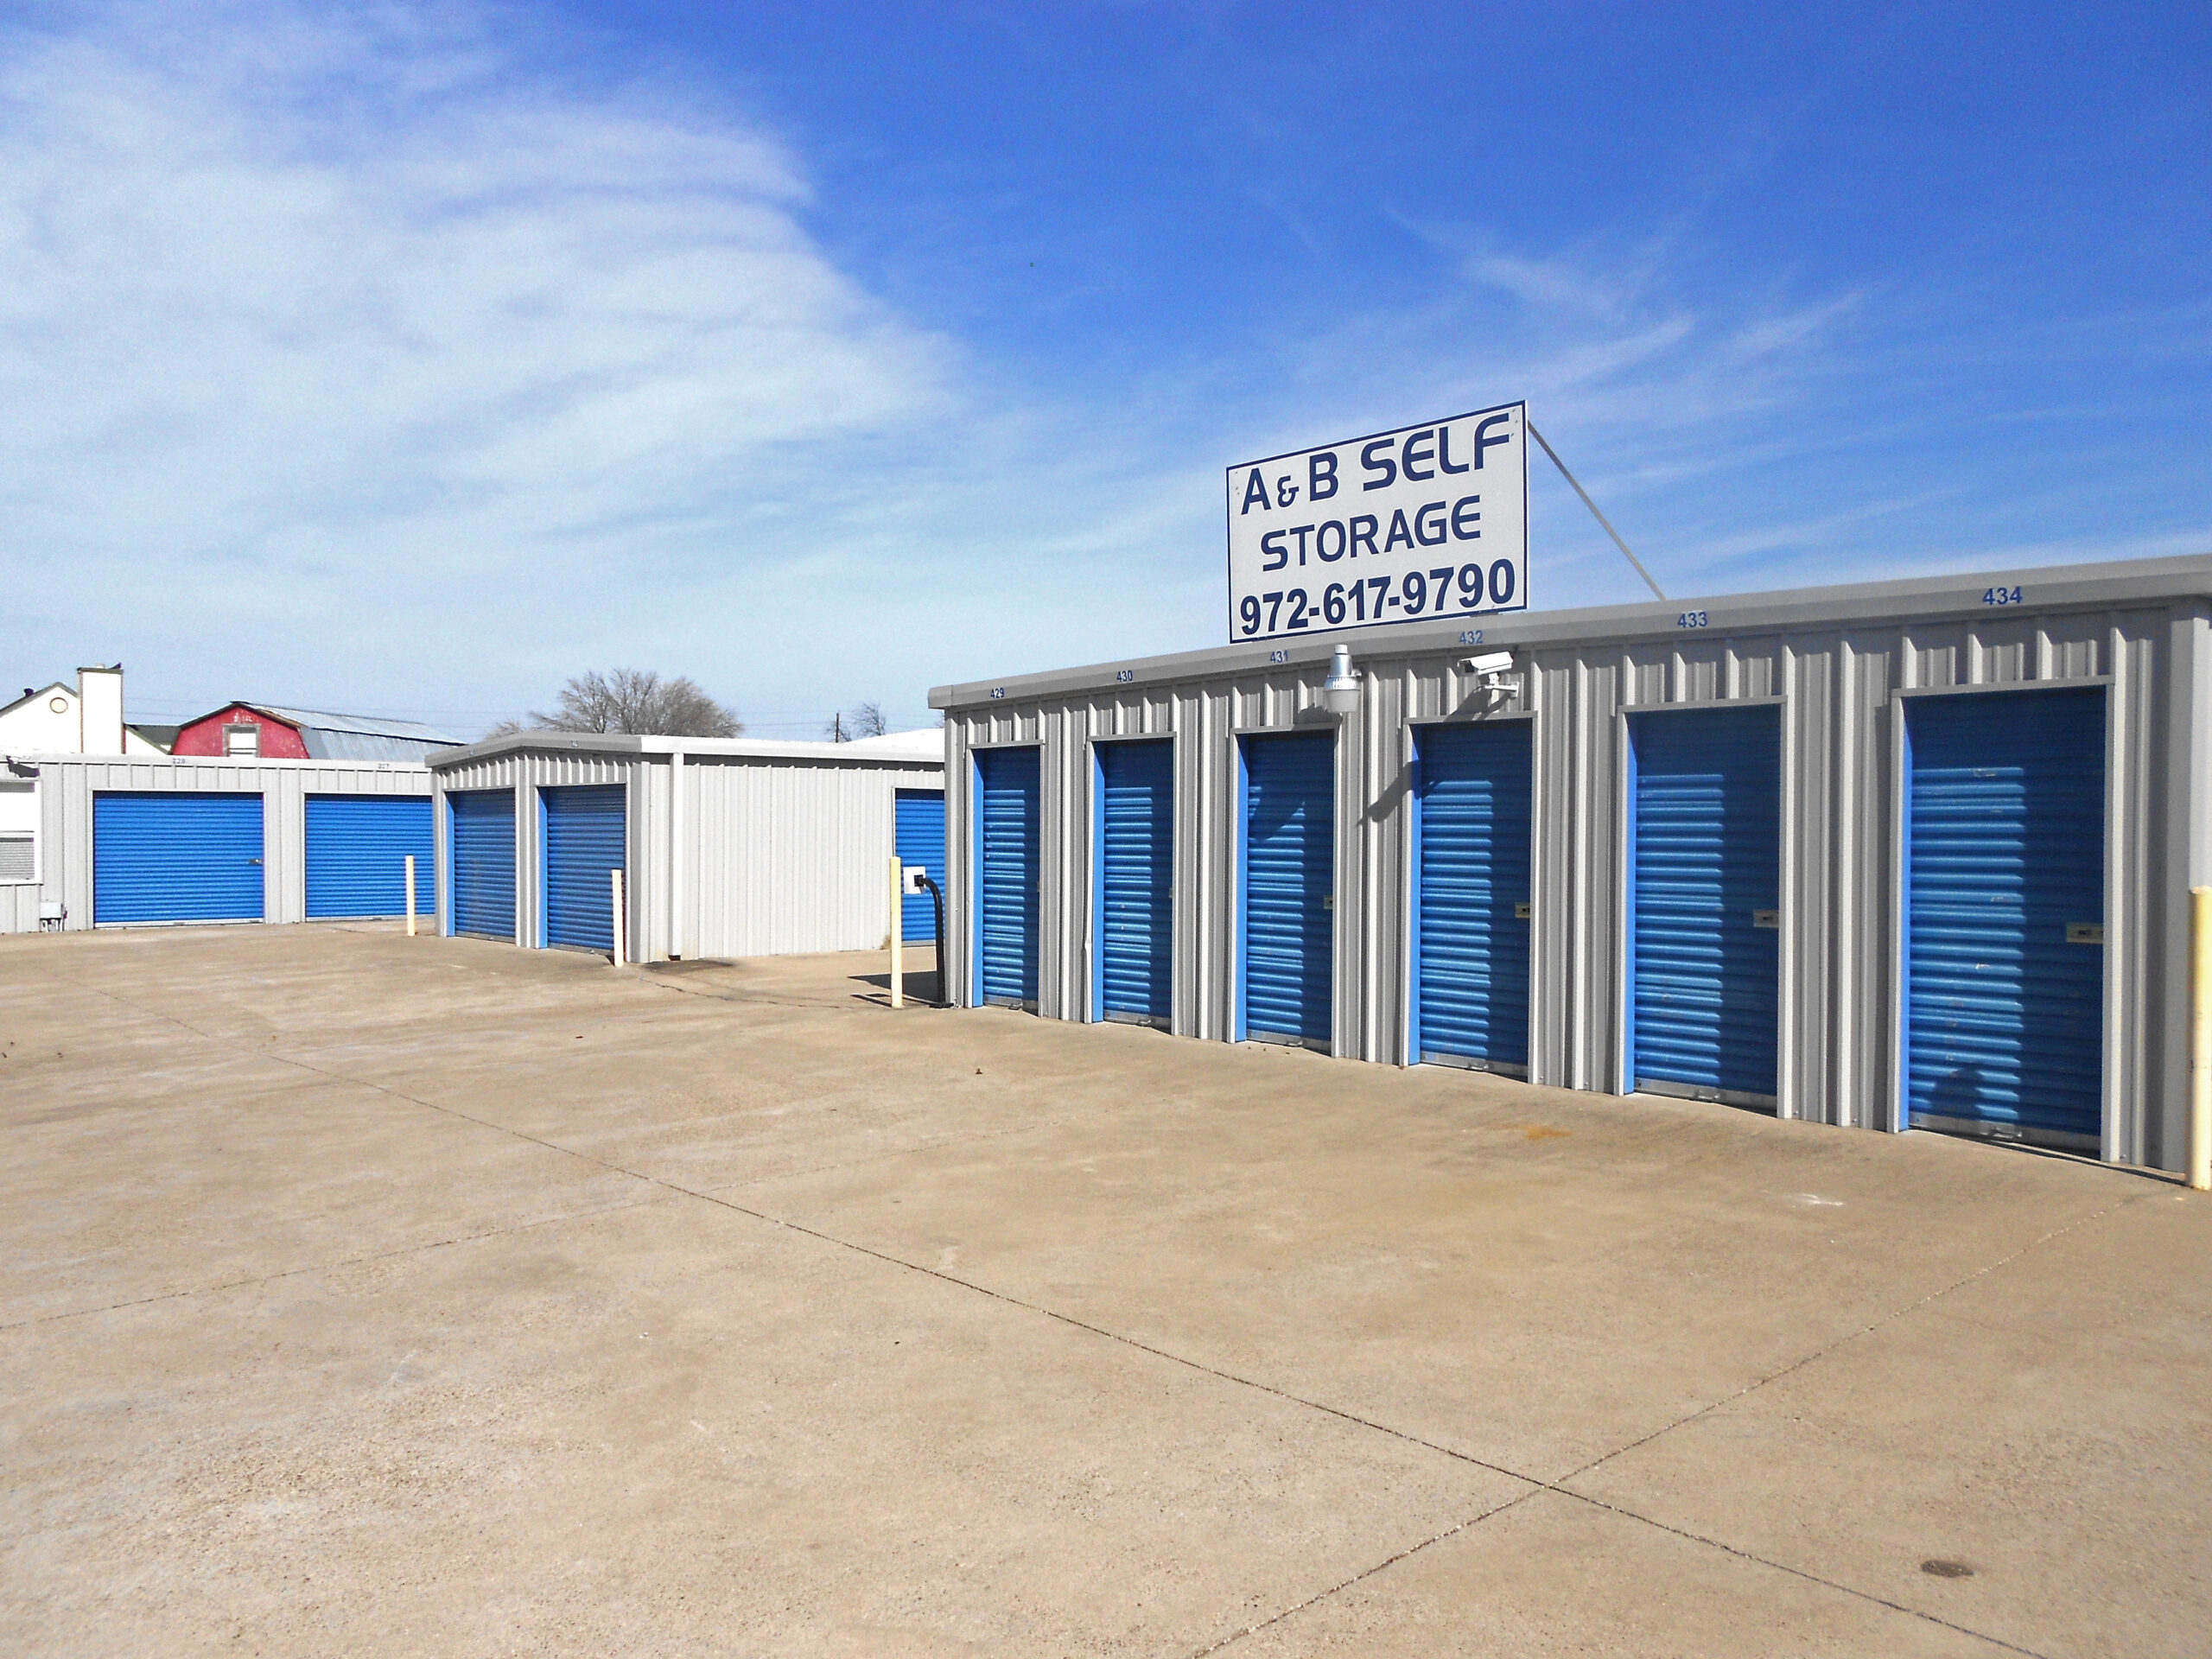 A&B Self Storage - Self Storage Facility For Sale by The Karr-Cunningham Storage Team